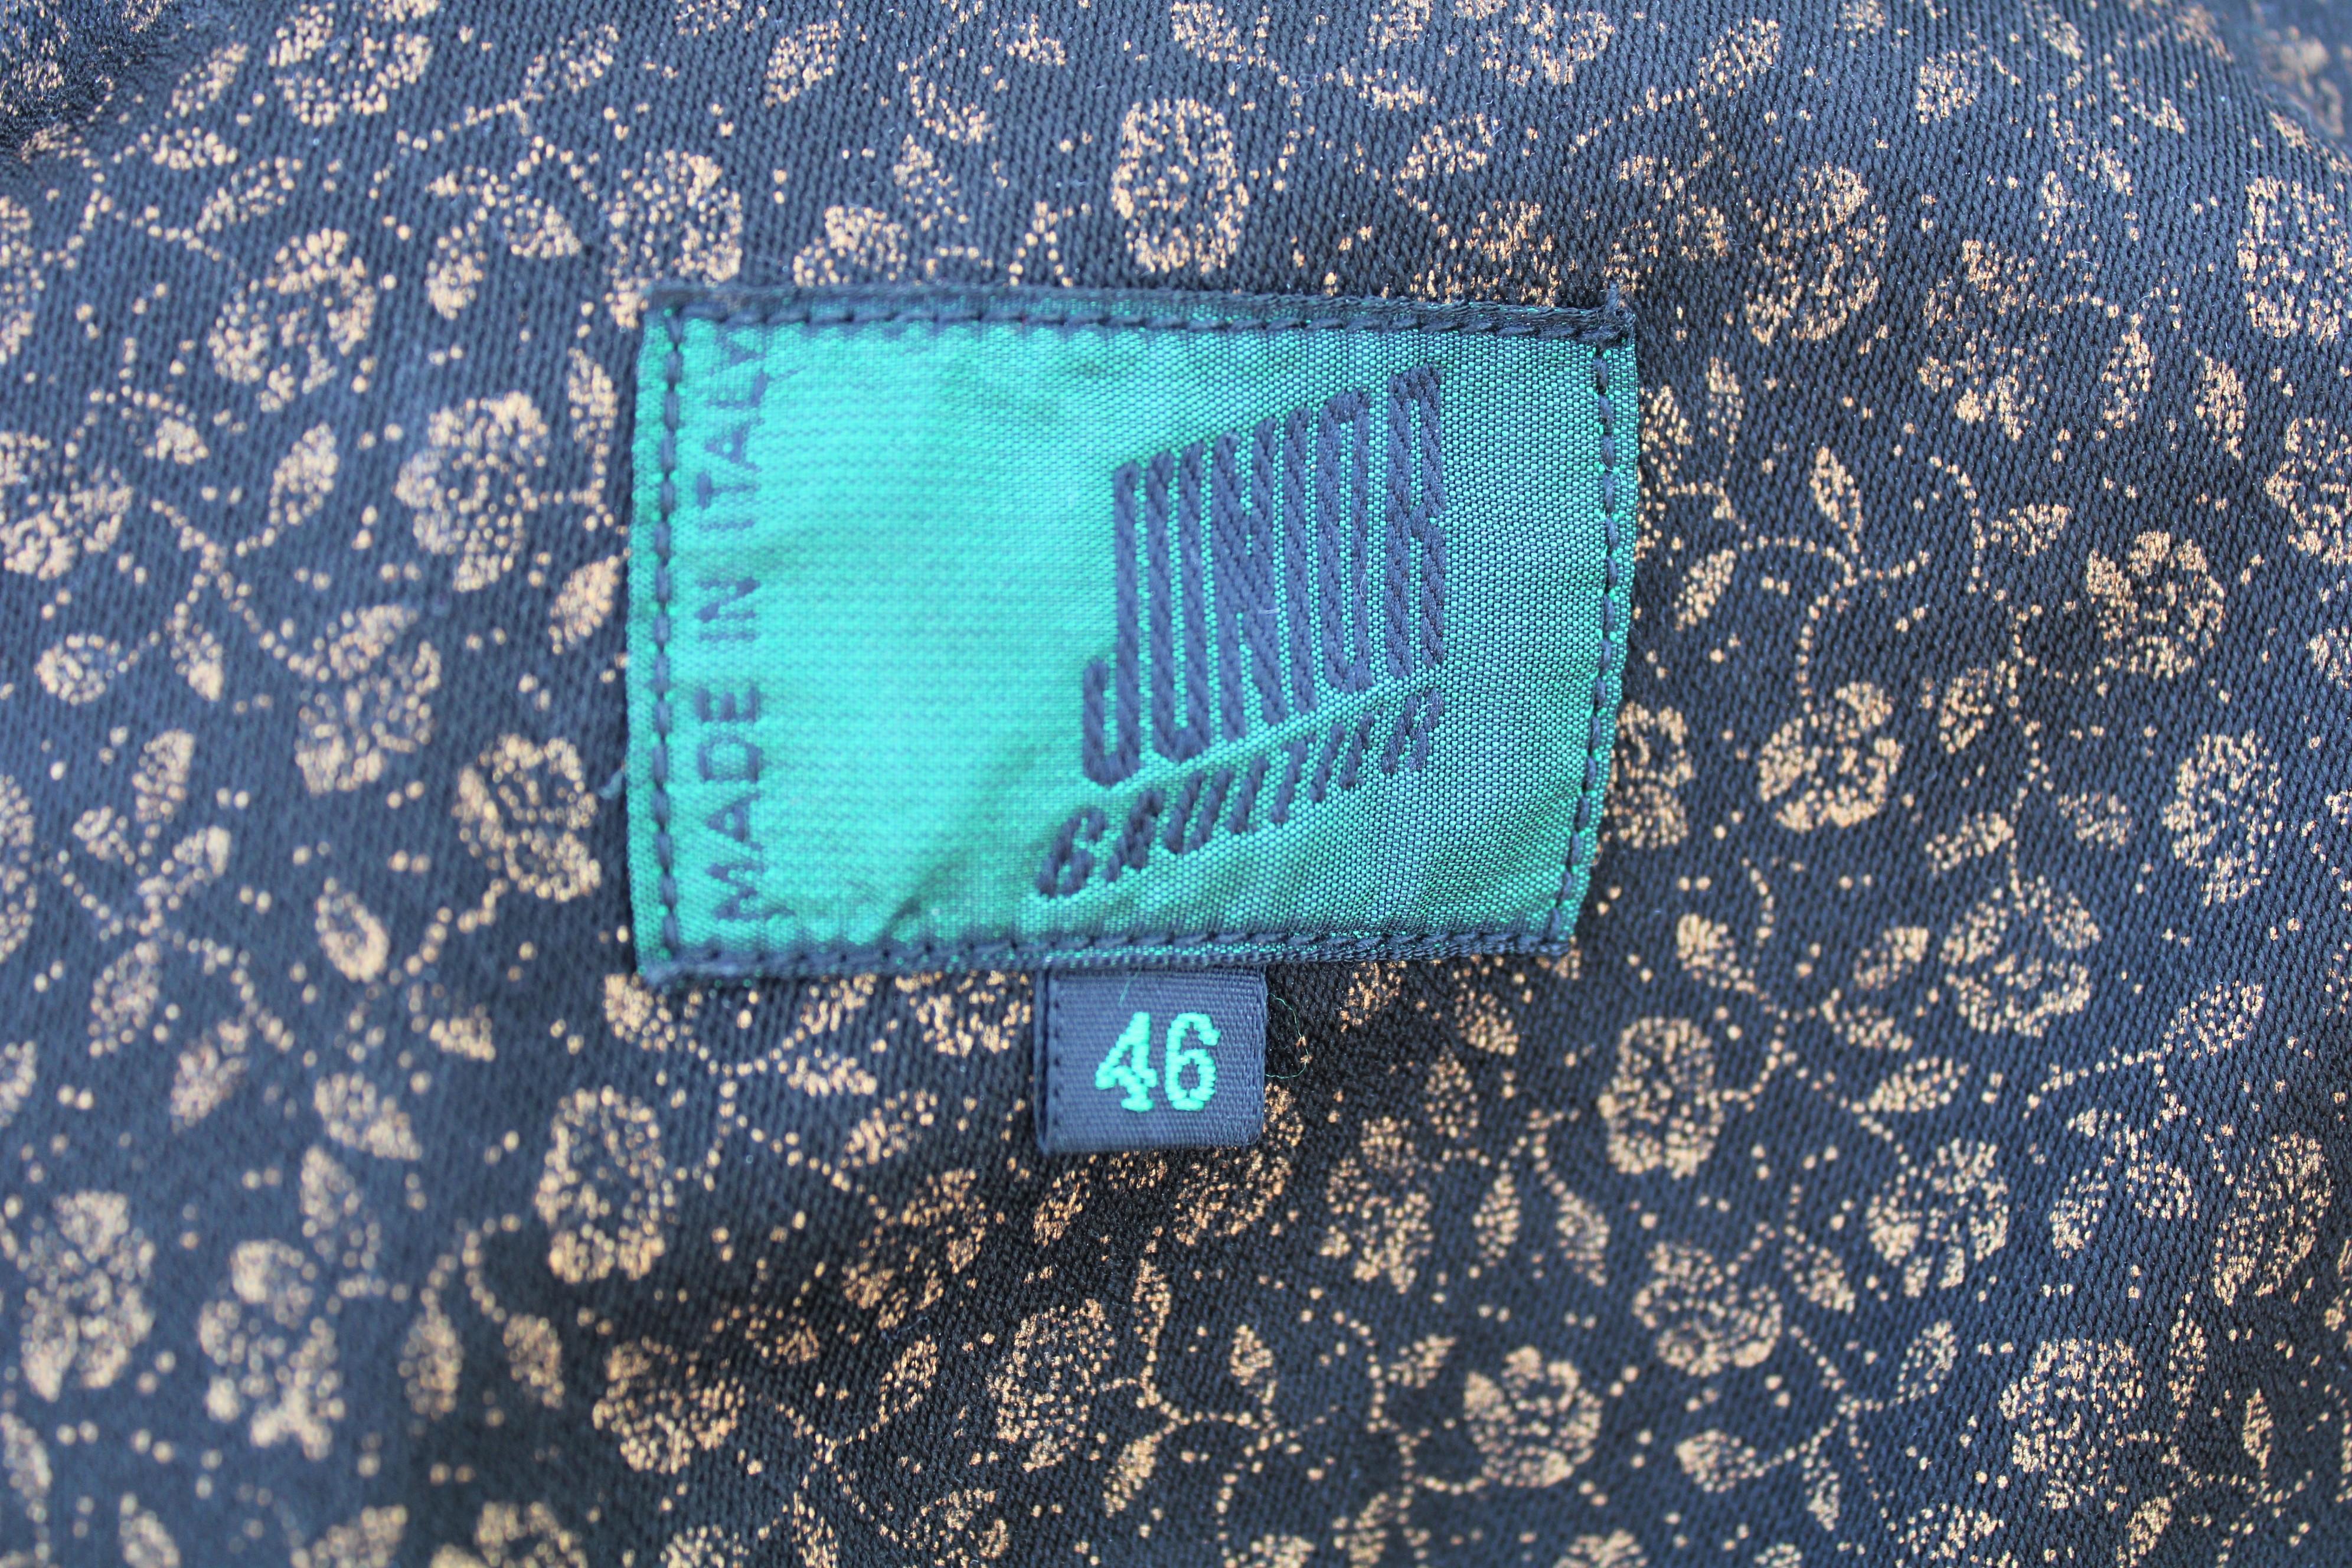 Jean Paul Junior Gaultier SS 1988 Runway Bonded Corset Denim Lace Up Jacket For Sale 8